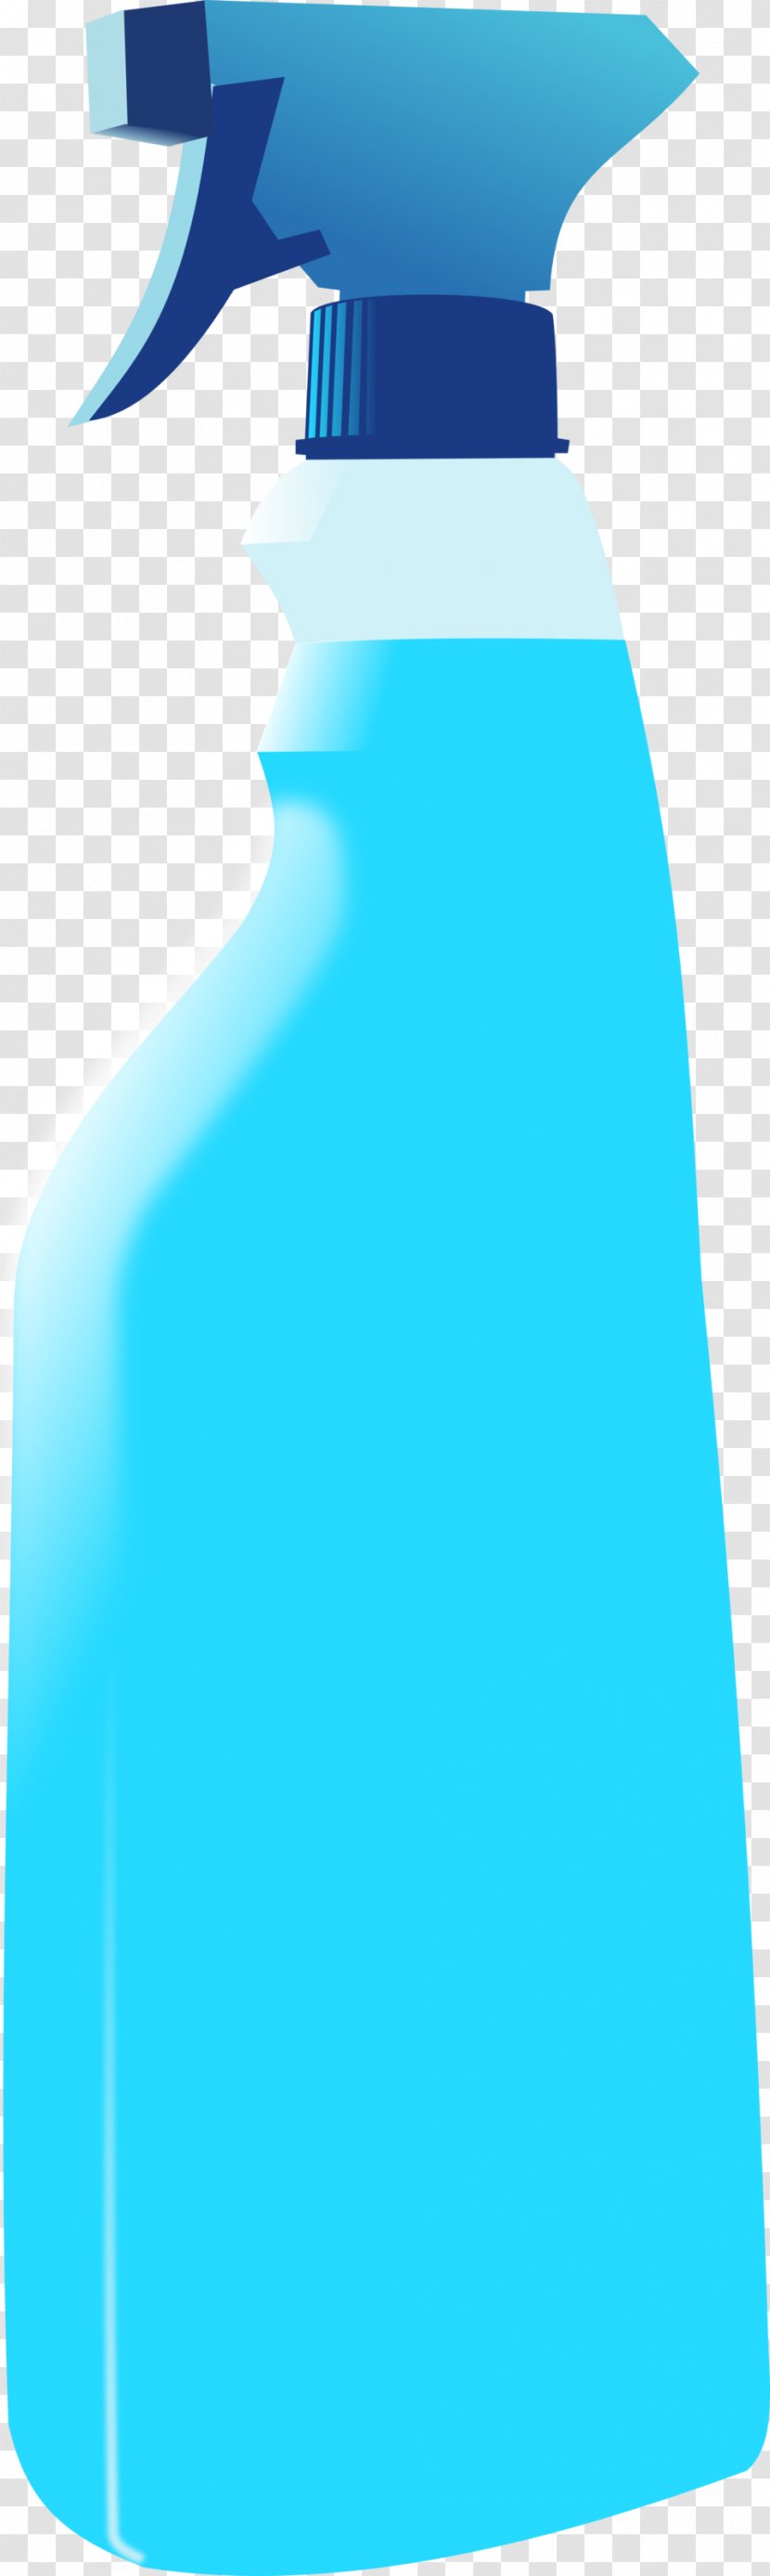 Spray Bottle Plastic Aerosol - Windex Transparent PNG